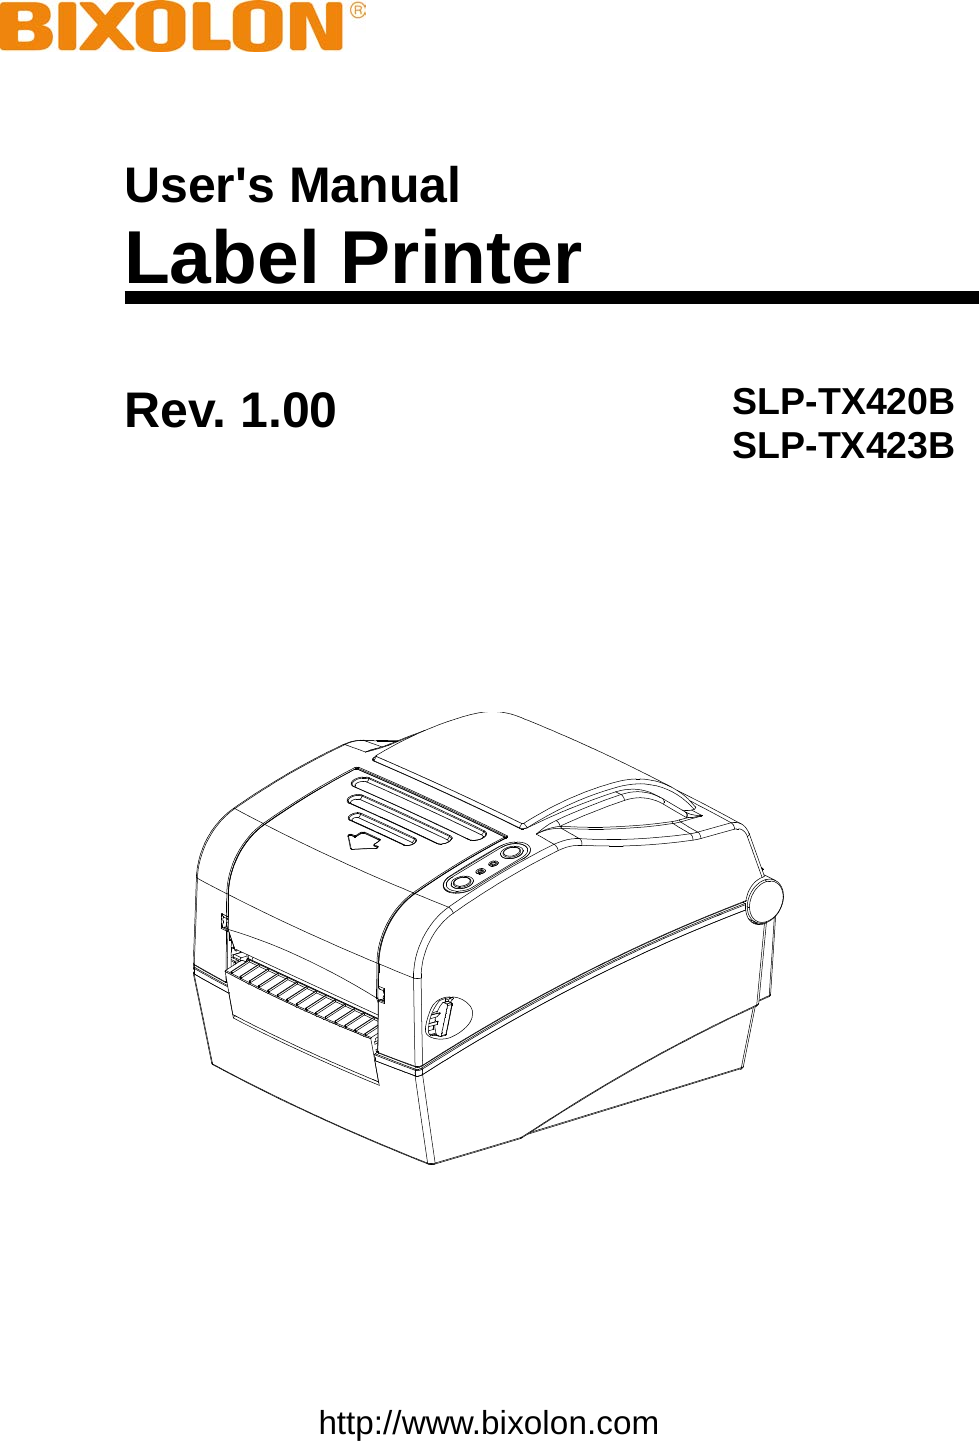      User&apos;s Manual Label Printer Rev. 1.00 SLP-TX420B SLP-TX423B     http://www.bixolon.com 